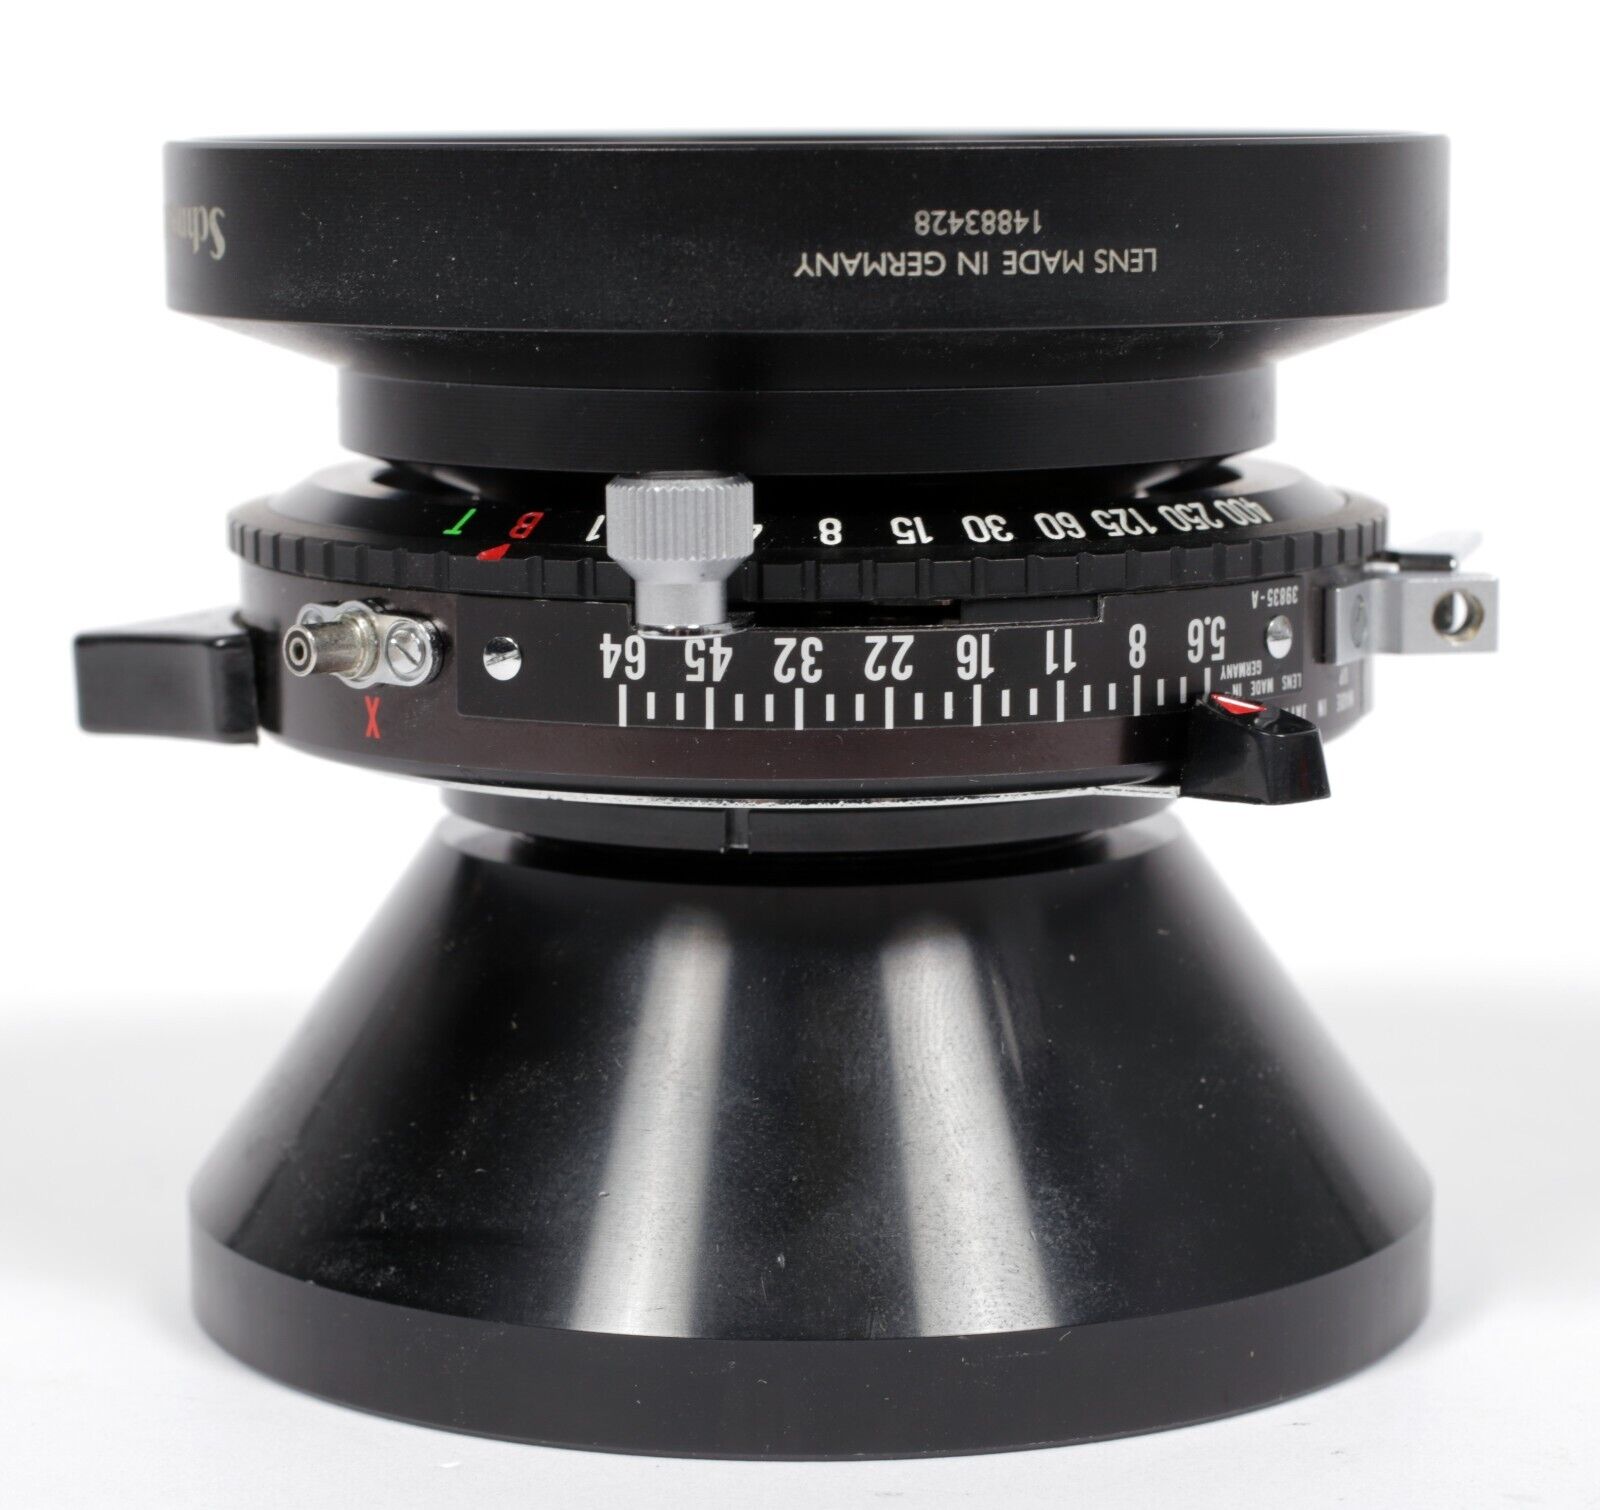 Schneider Apo Symmar L MC 210mm F5.6 Lens in Copal #1 Shutter